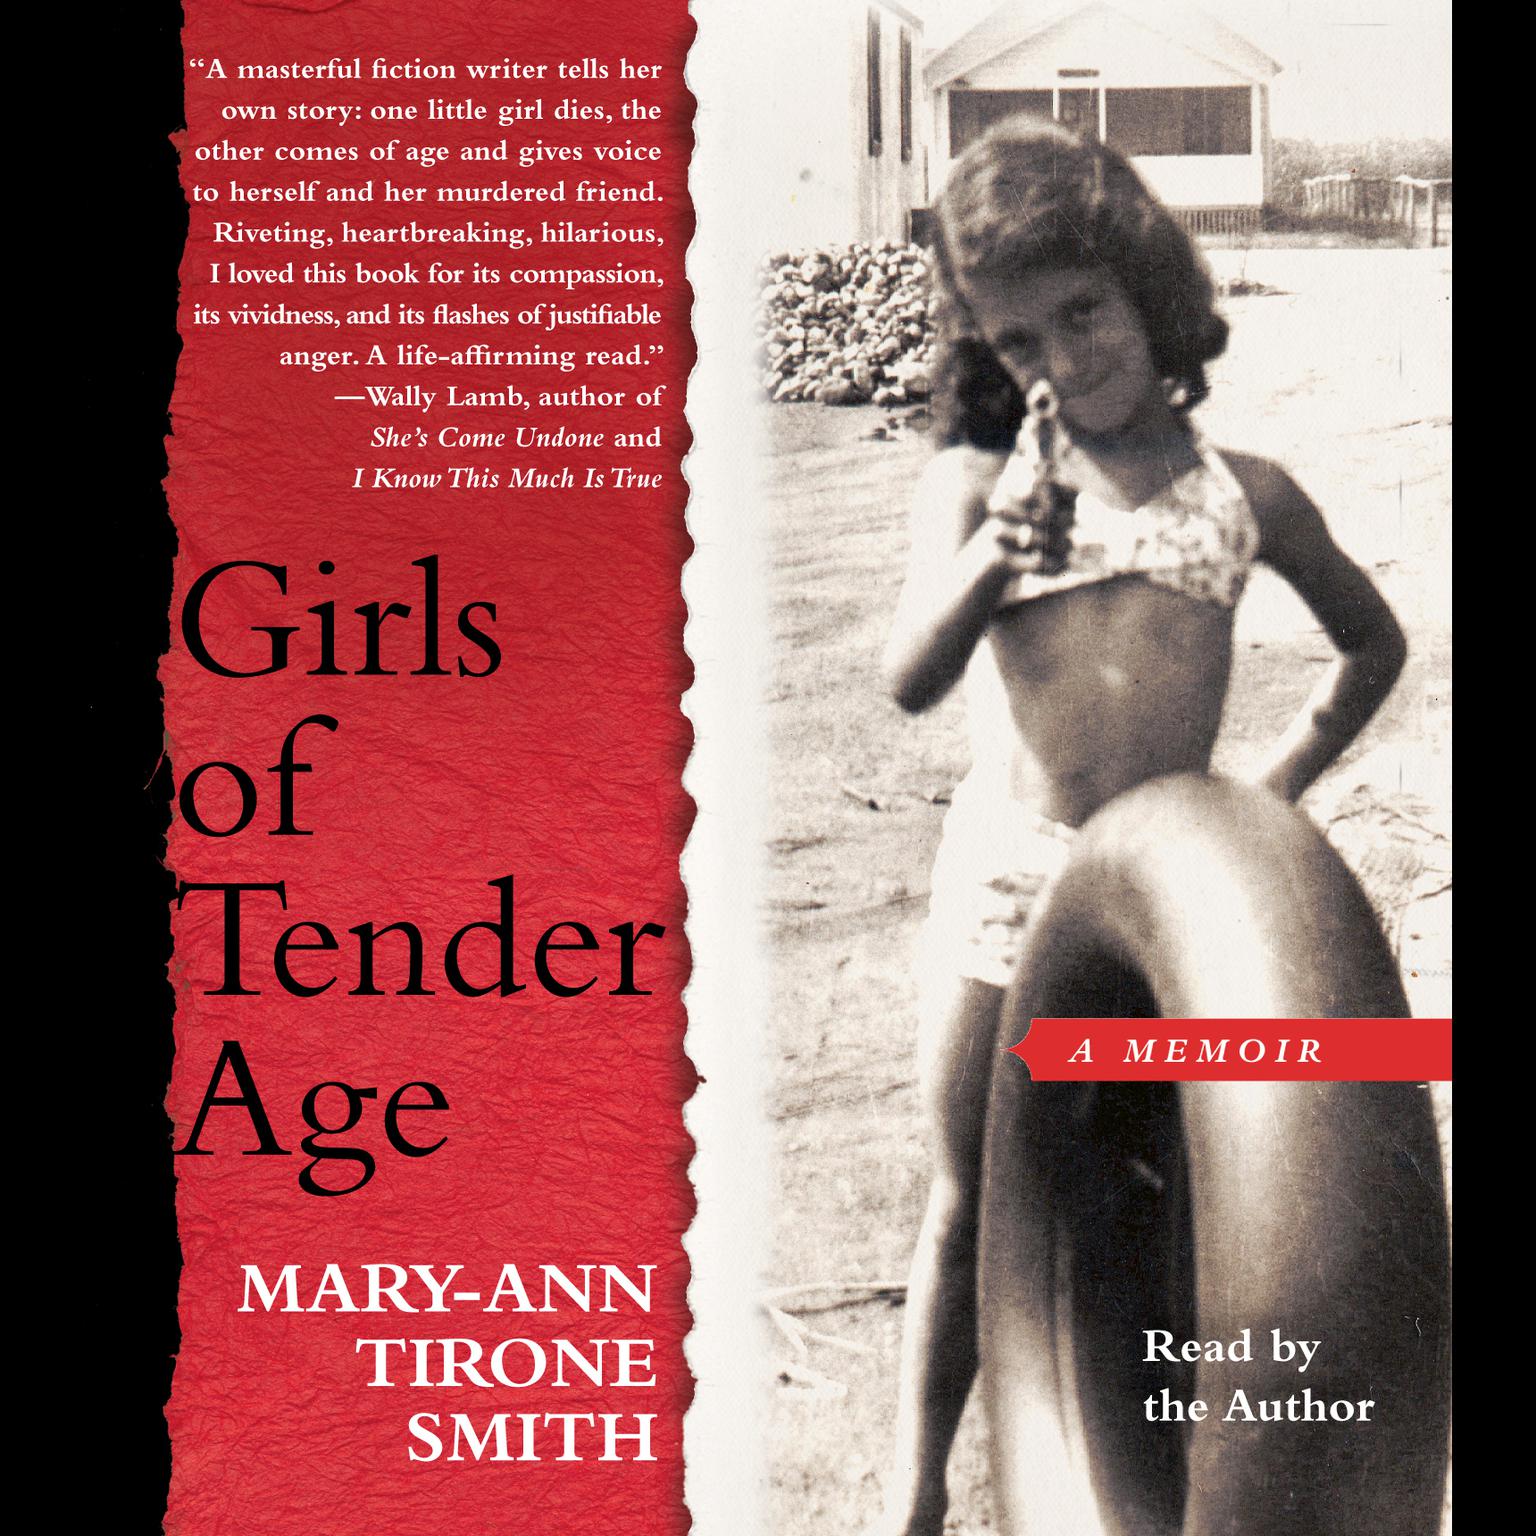 Girls of Tender Age (Abridged): A Memoir Audiobook, by Mary-Ann Tirone Smith